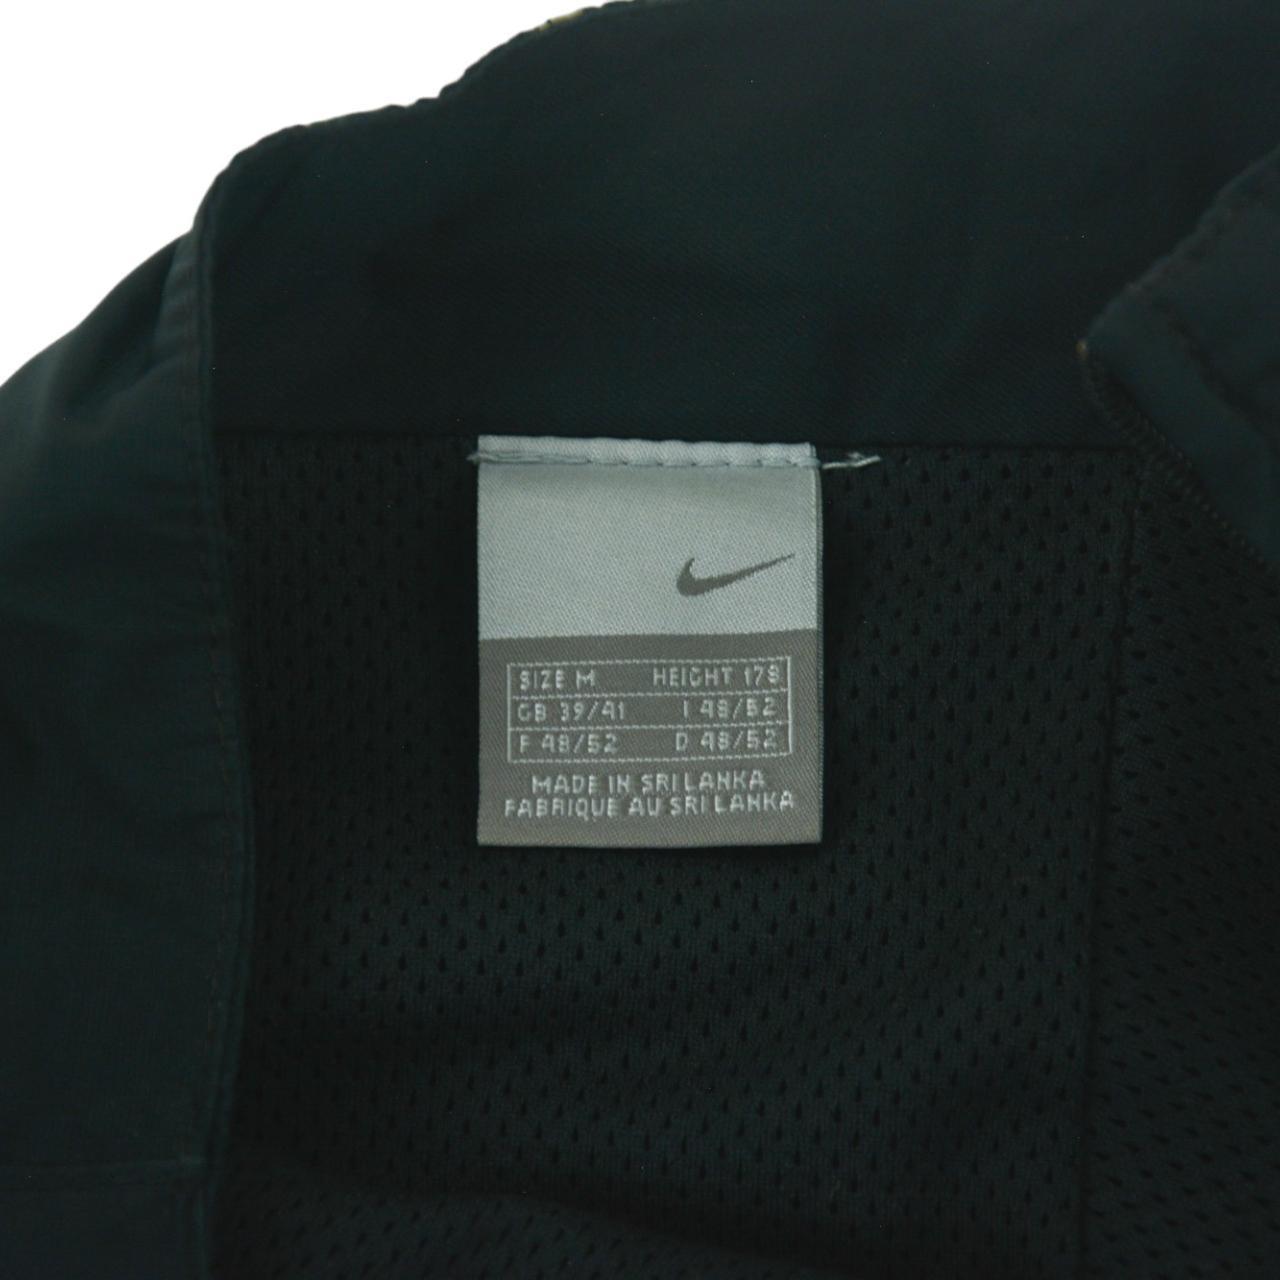 Vintage Nike Asymmetric Neck Zip Jacket with Asymmetrical Zip Size M - Known Source